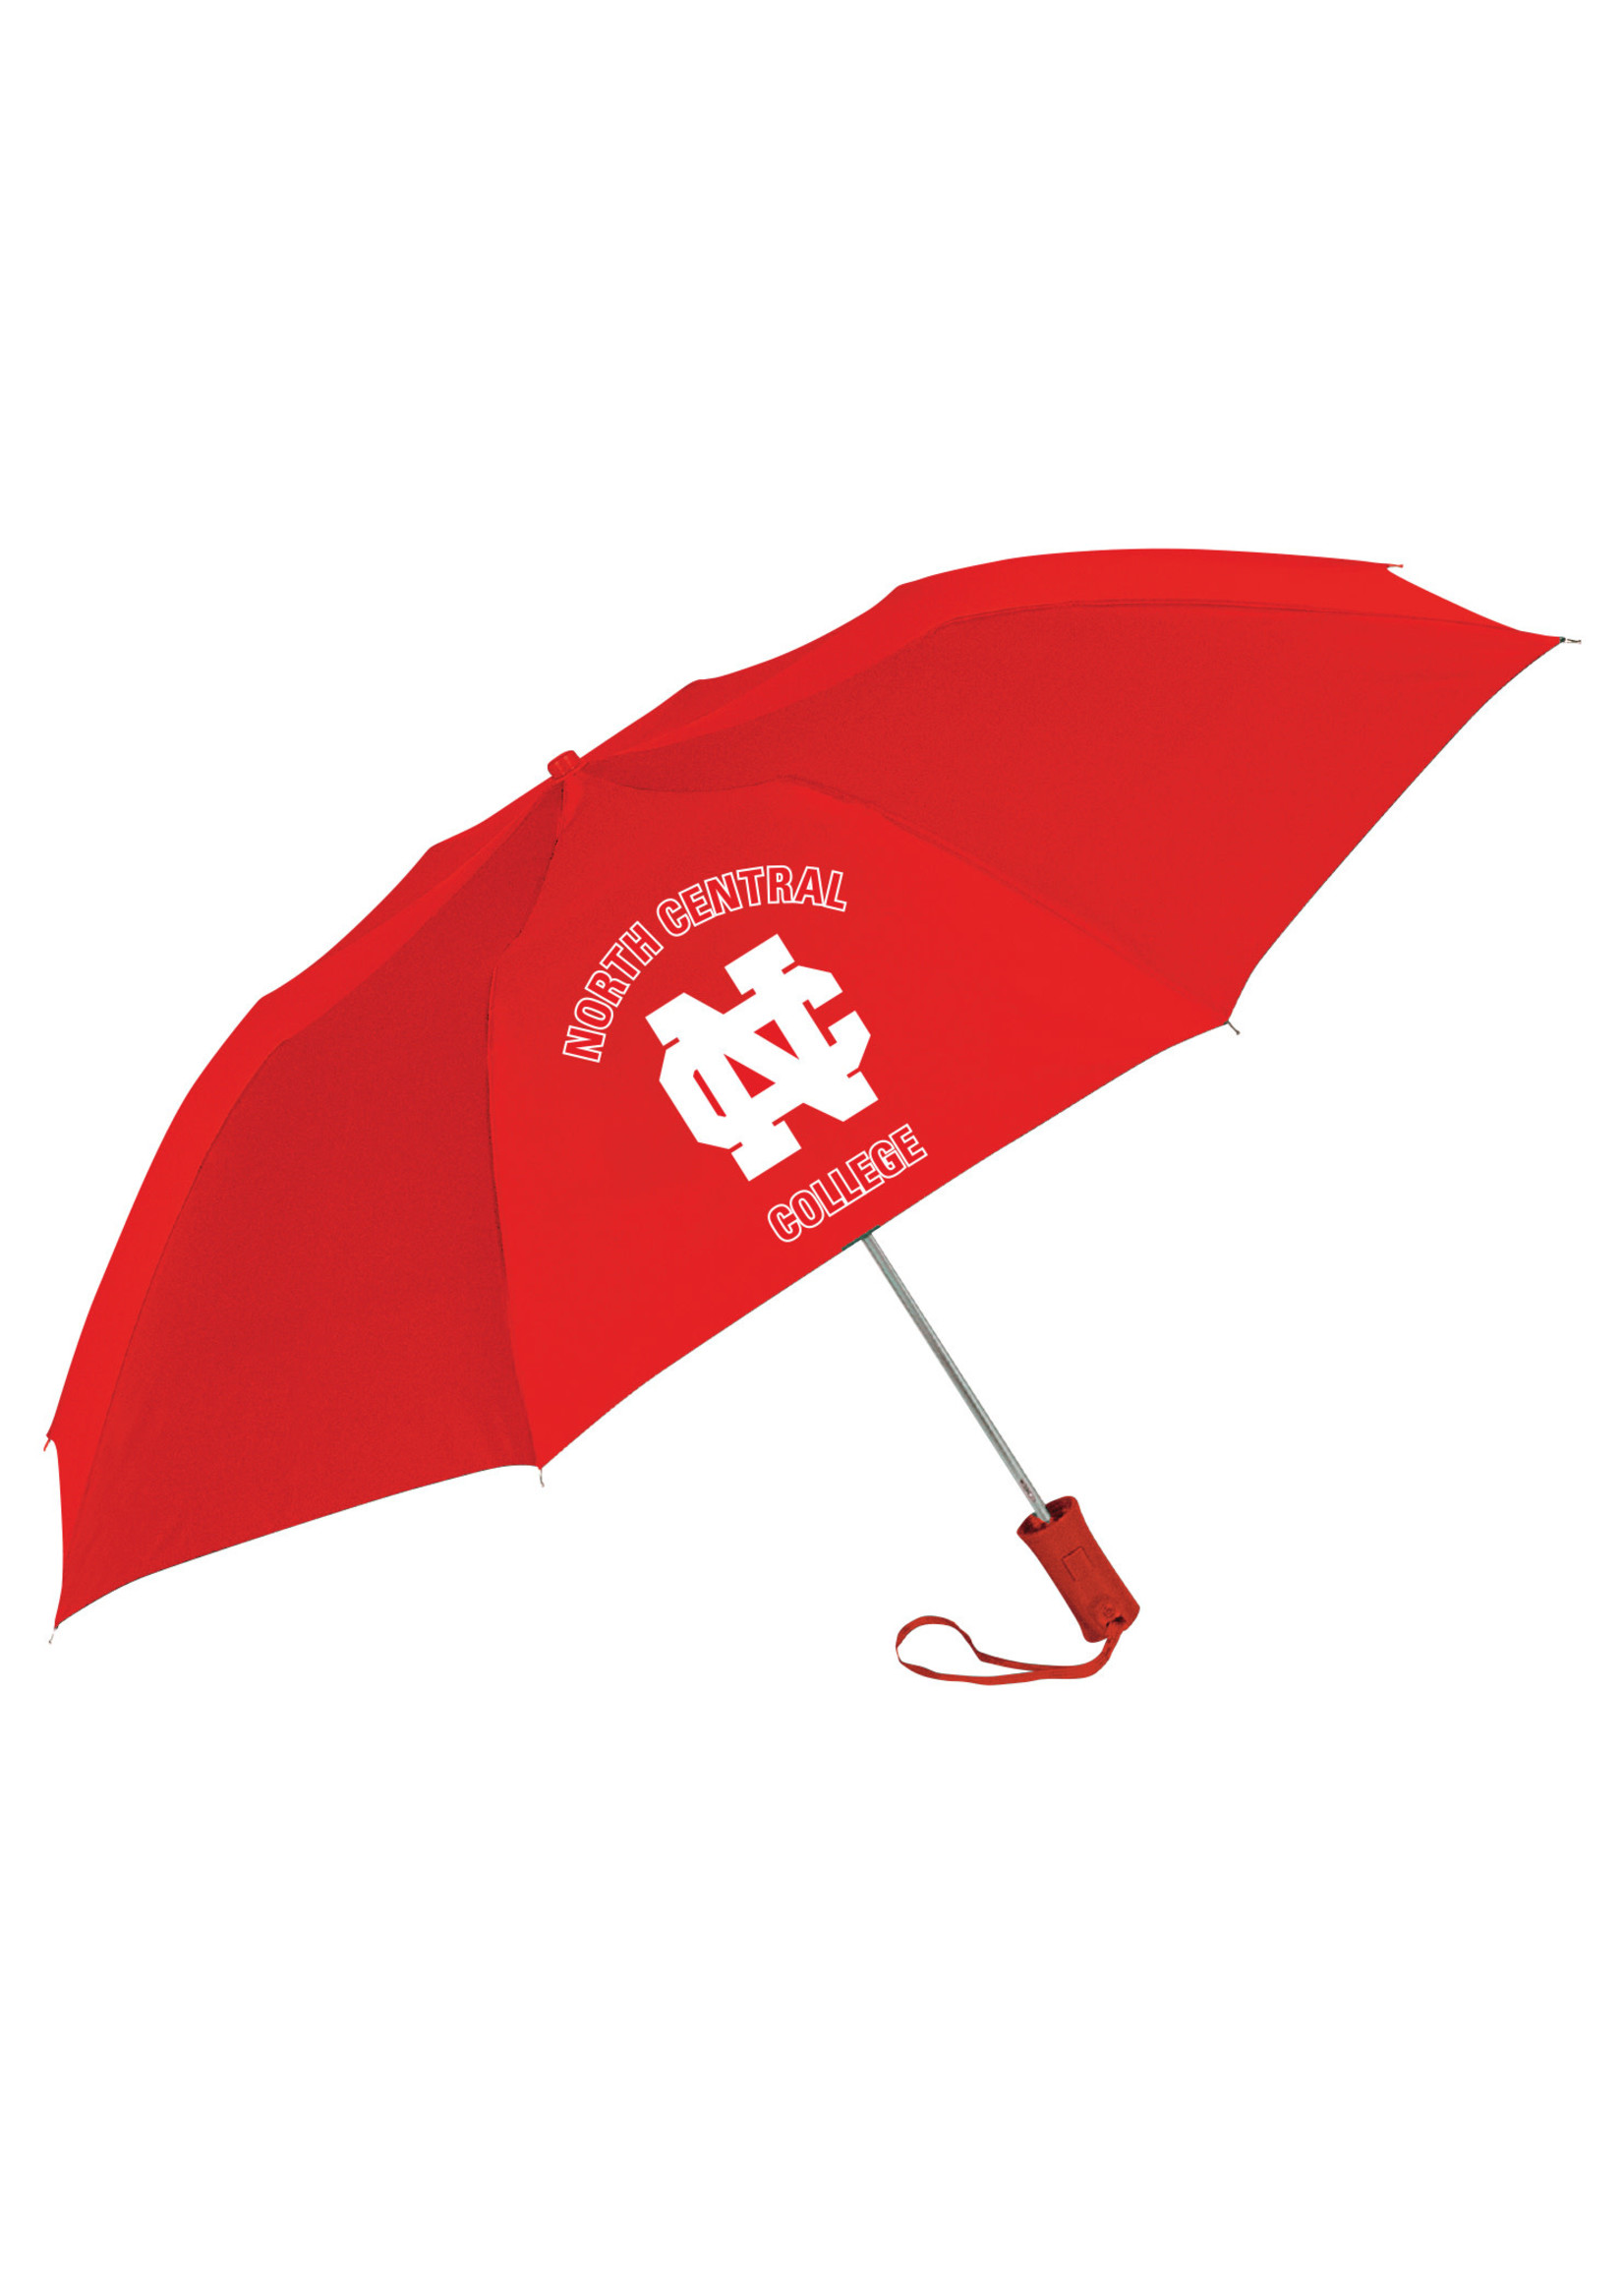 Storm Duds North Central College Umbrella